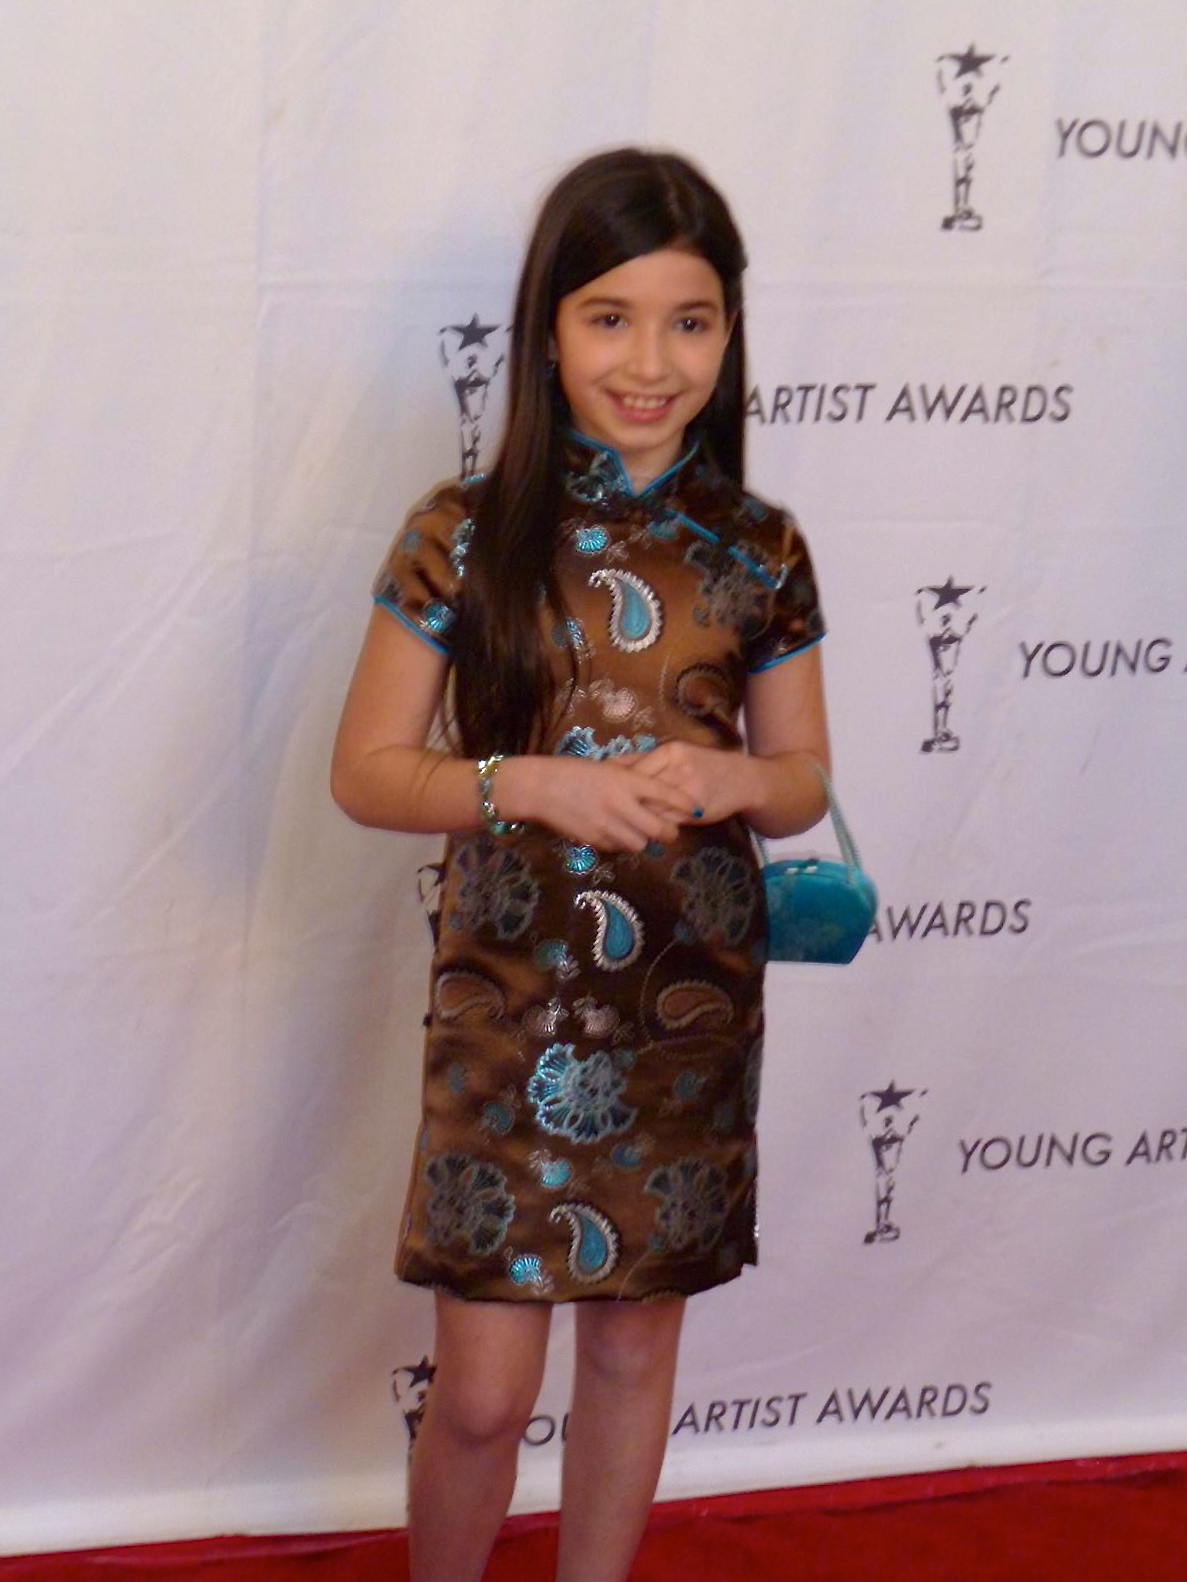 Olivia Steele Falconer. Award Winner at the 2011 Young Artist Awards